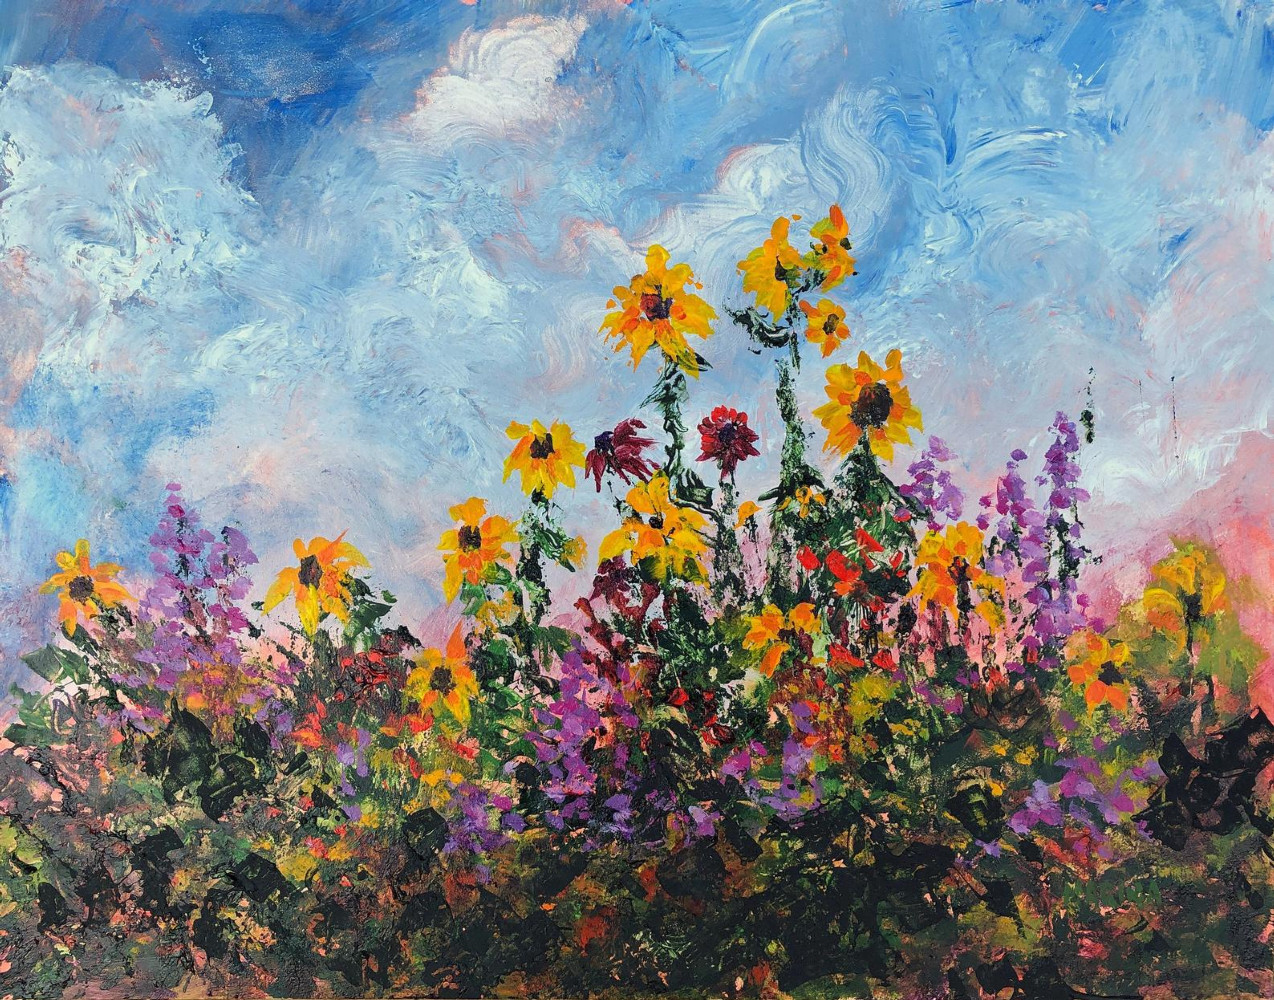 Sunflower Party
Original acrylic painting on panel